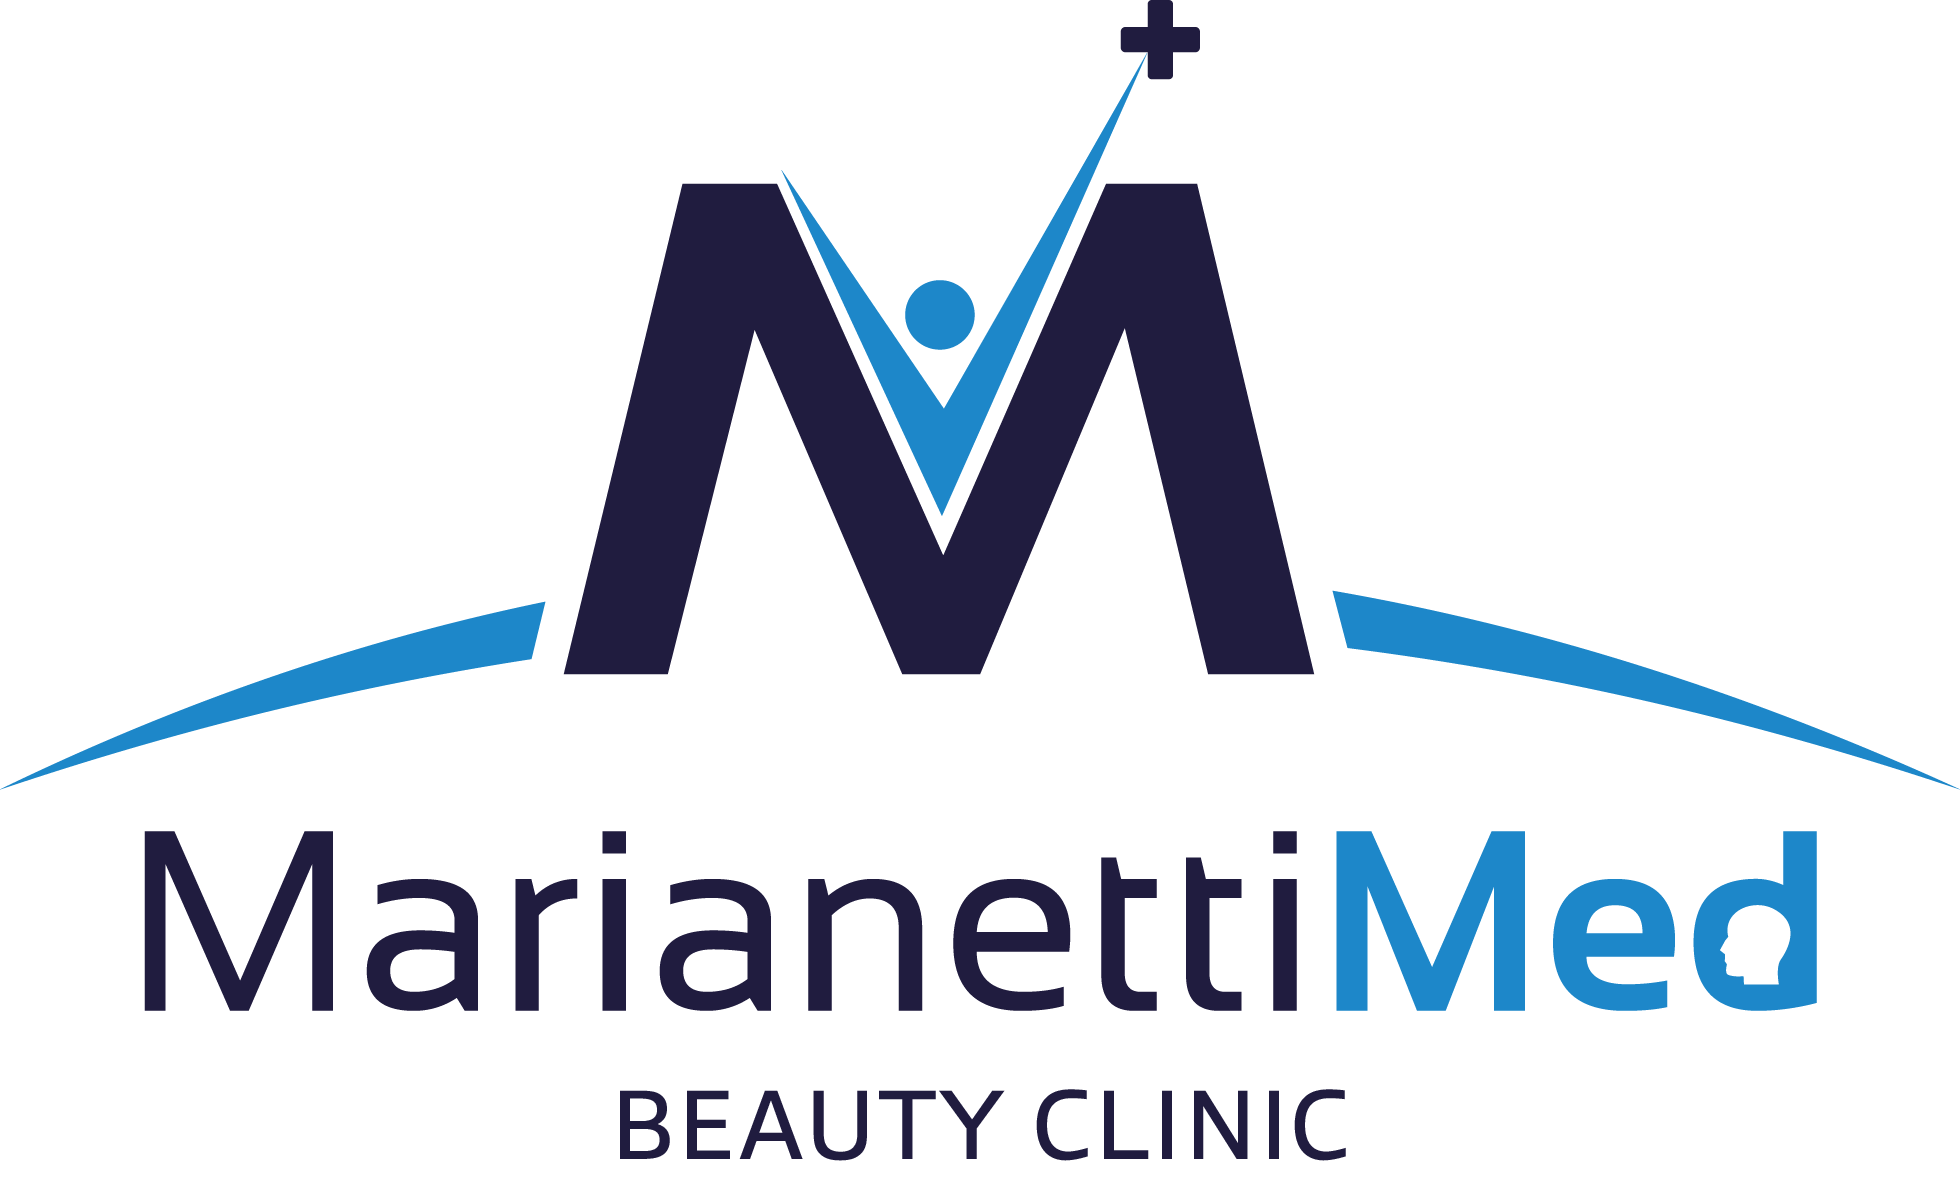 Marianetti Med